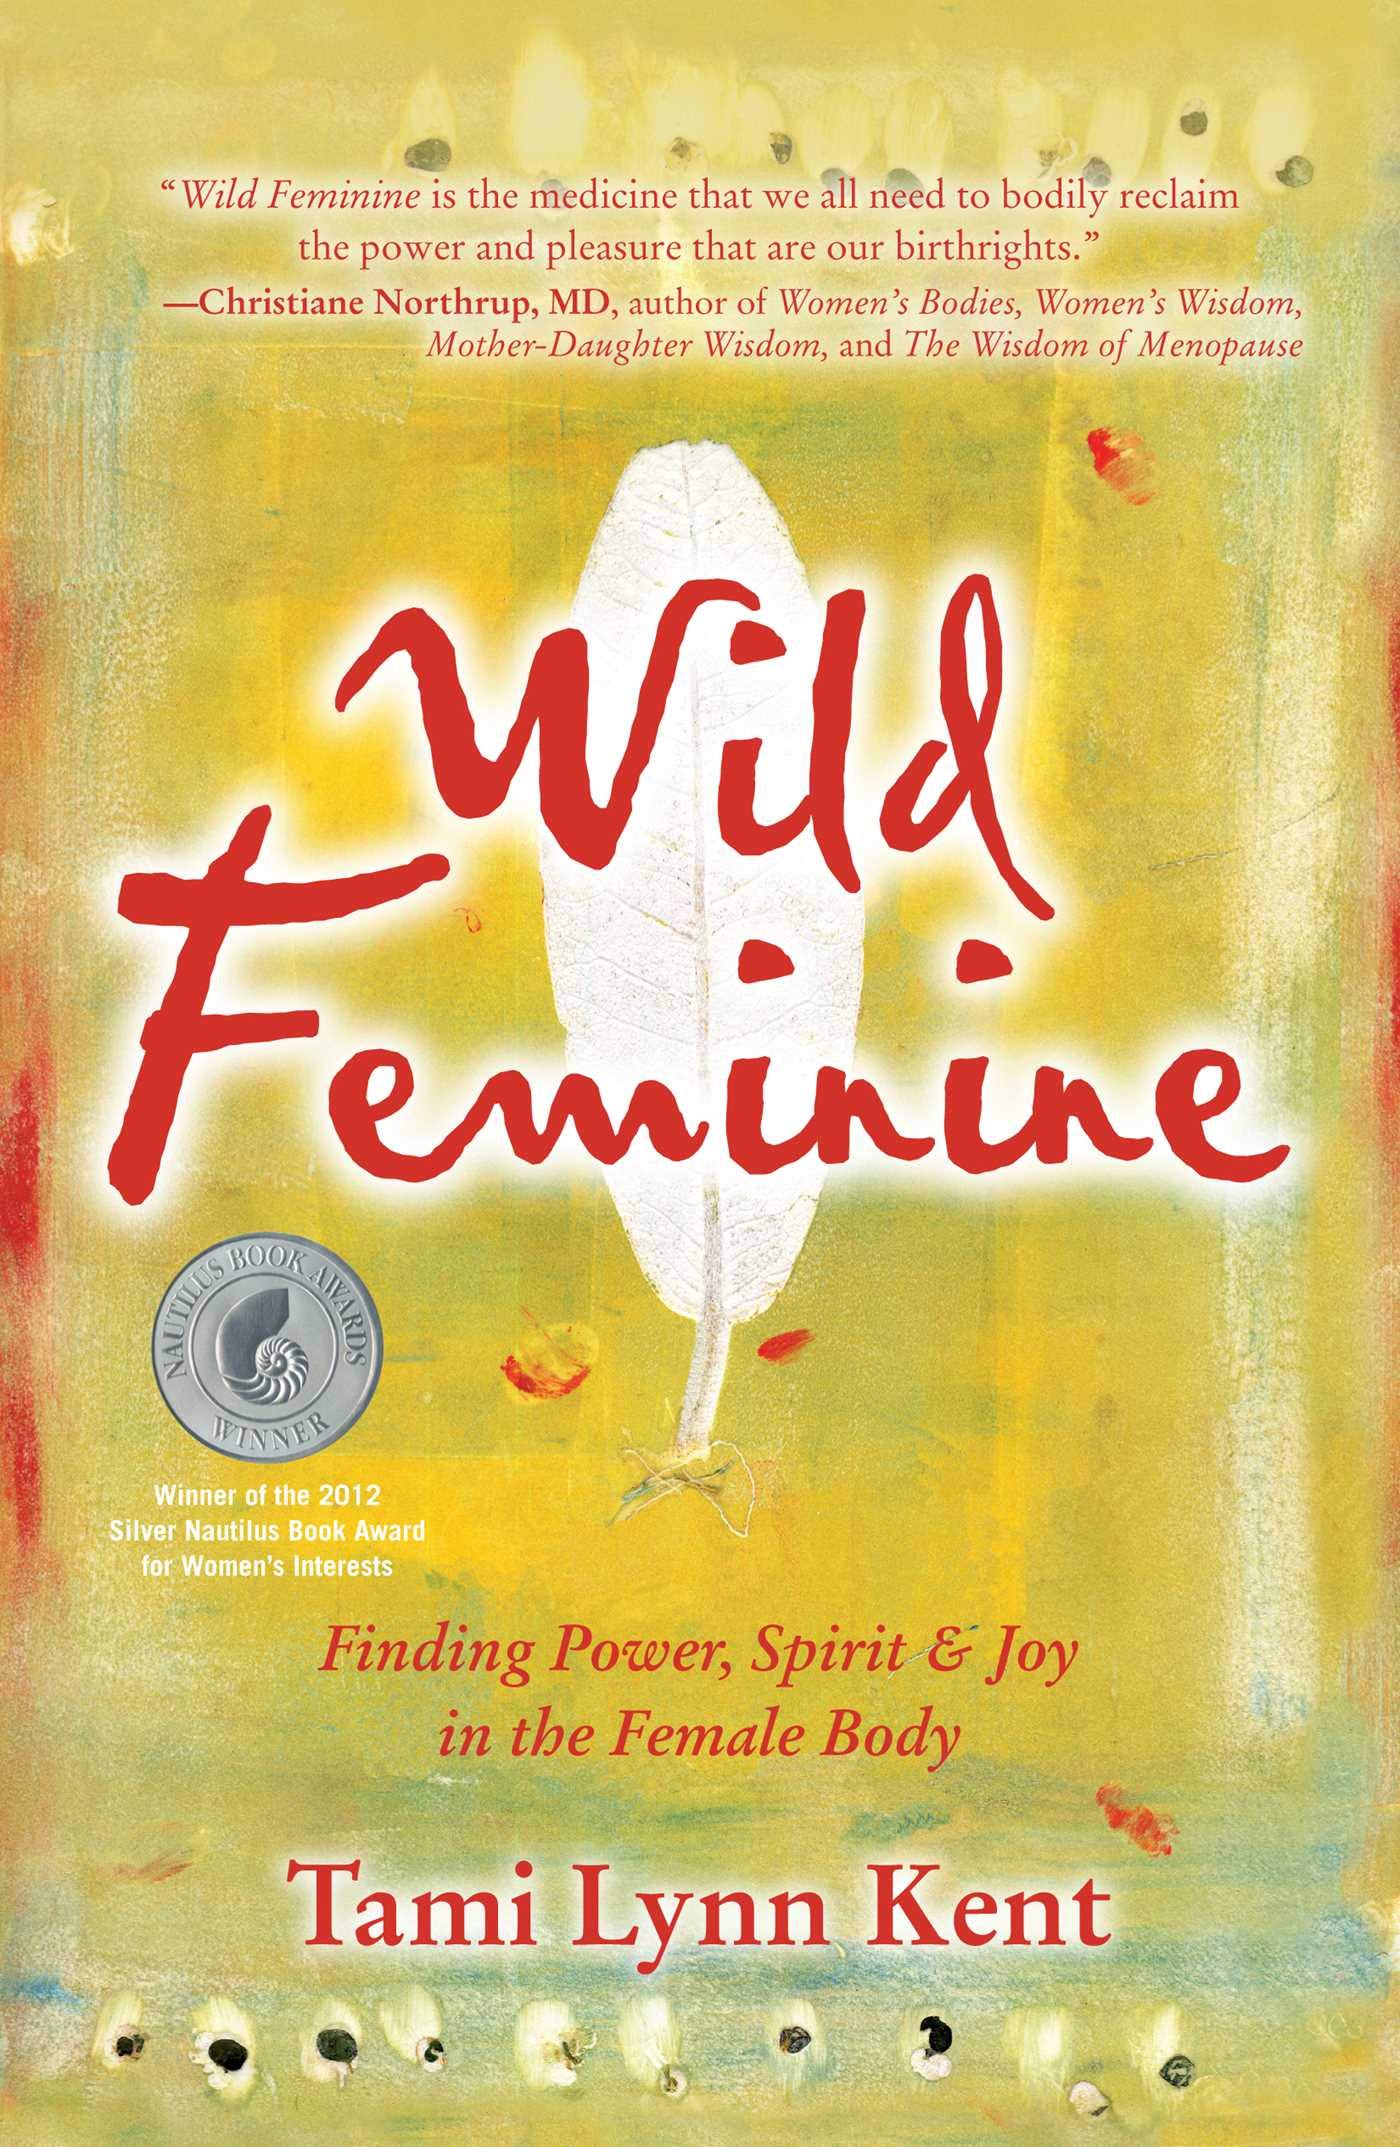 Book cover of Wild Feminine by Tami Lynn Kent